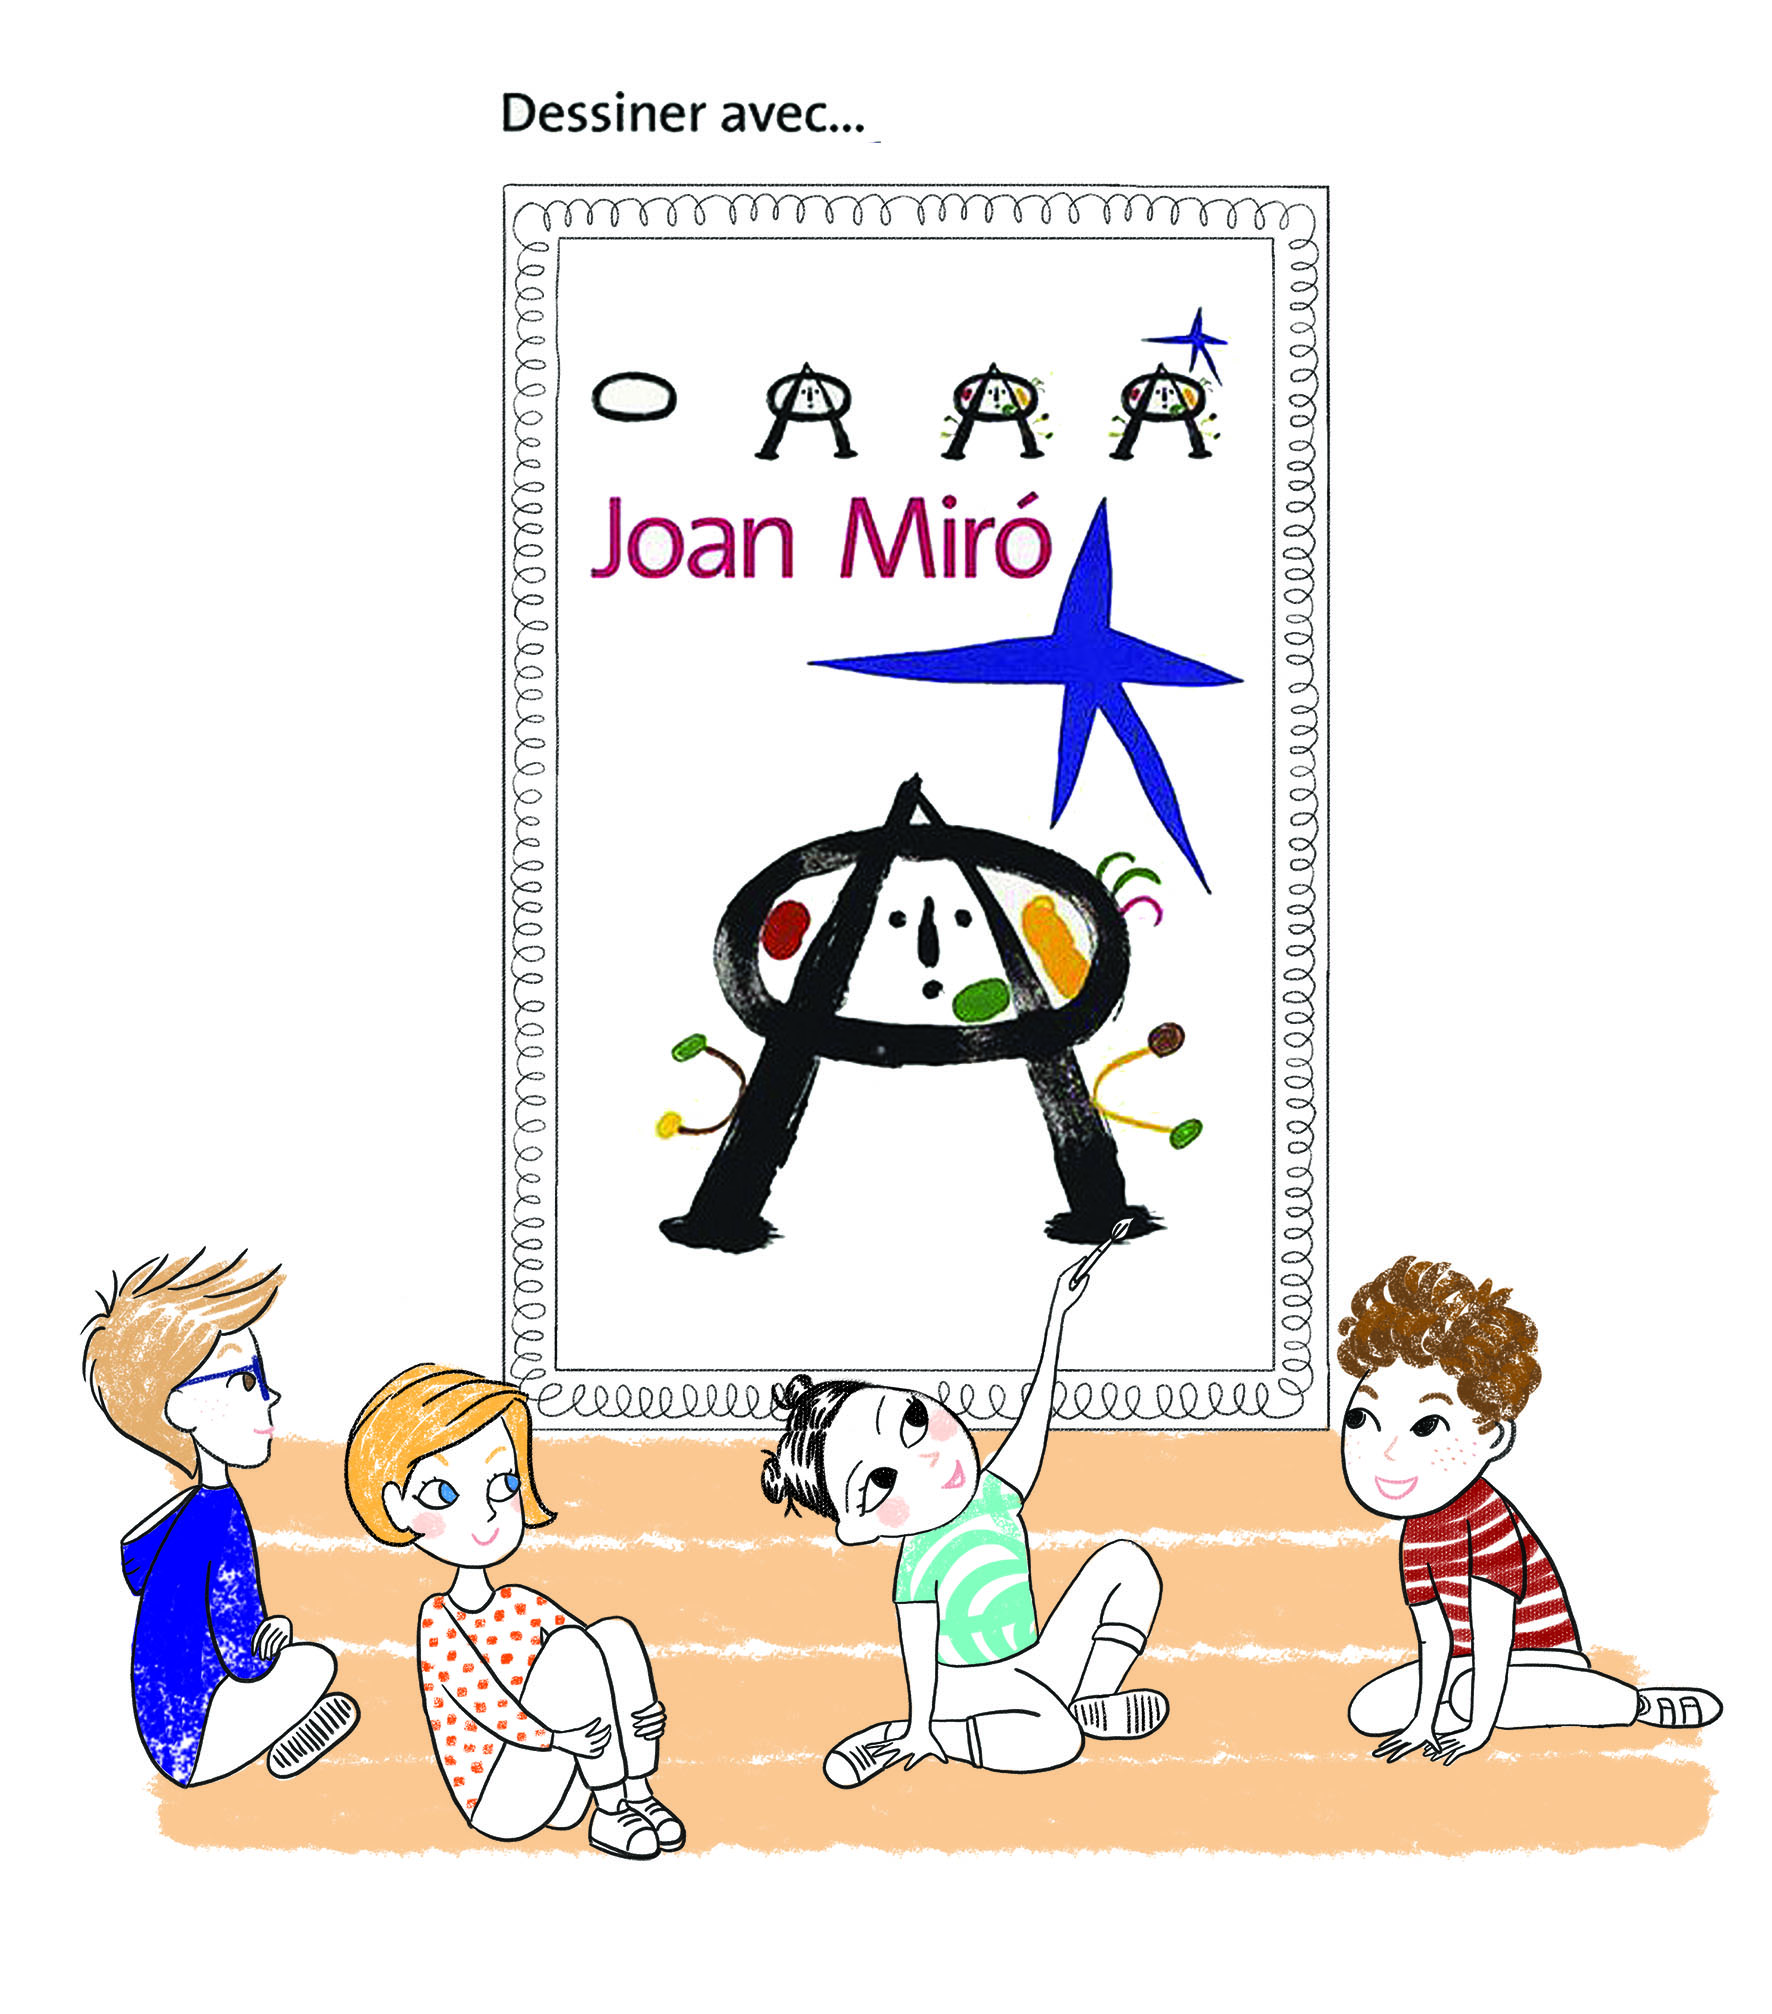 Dessiner avec jean Miro